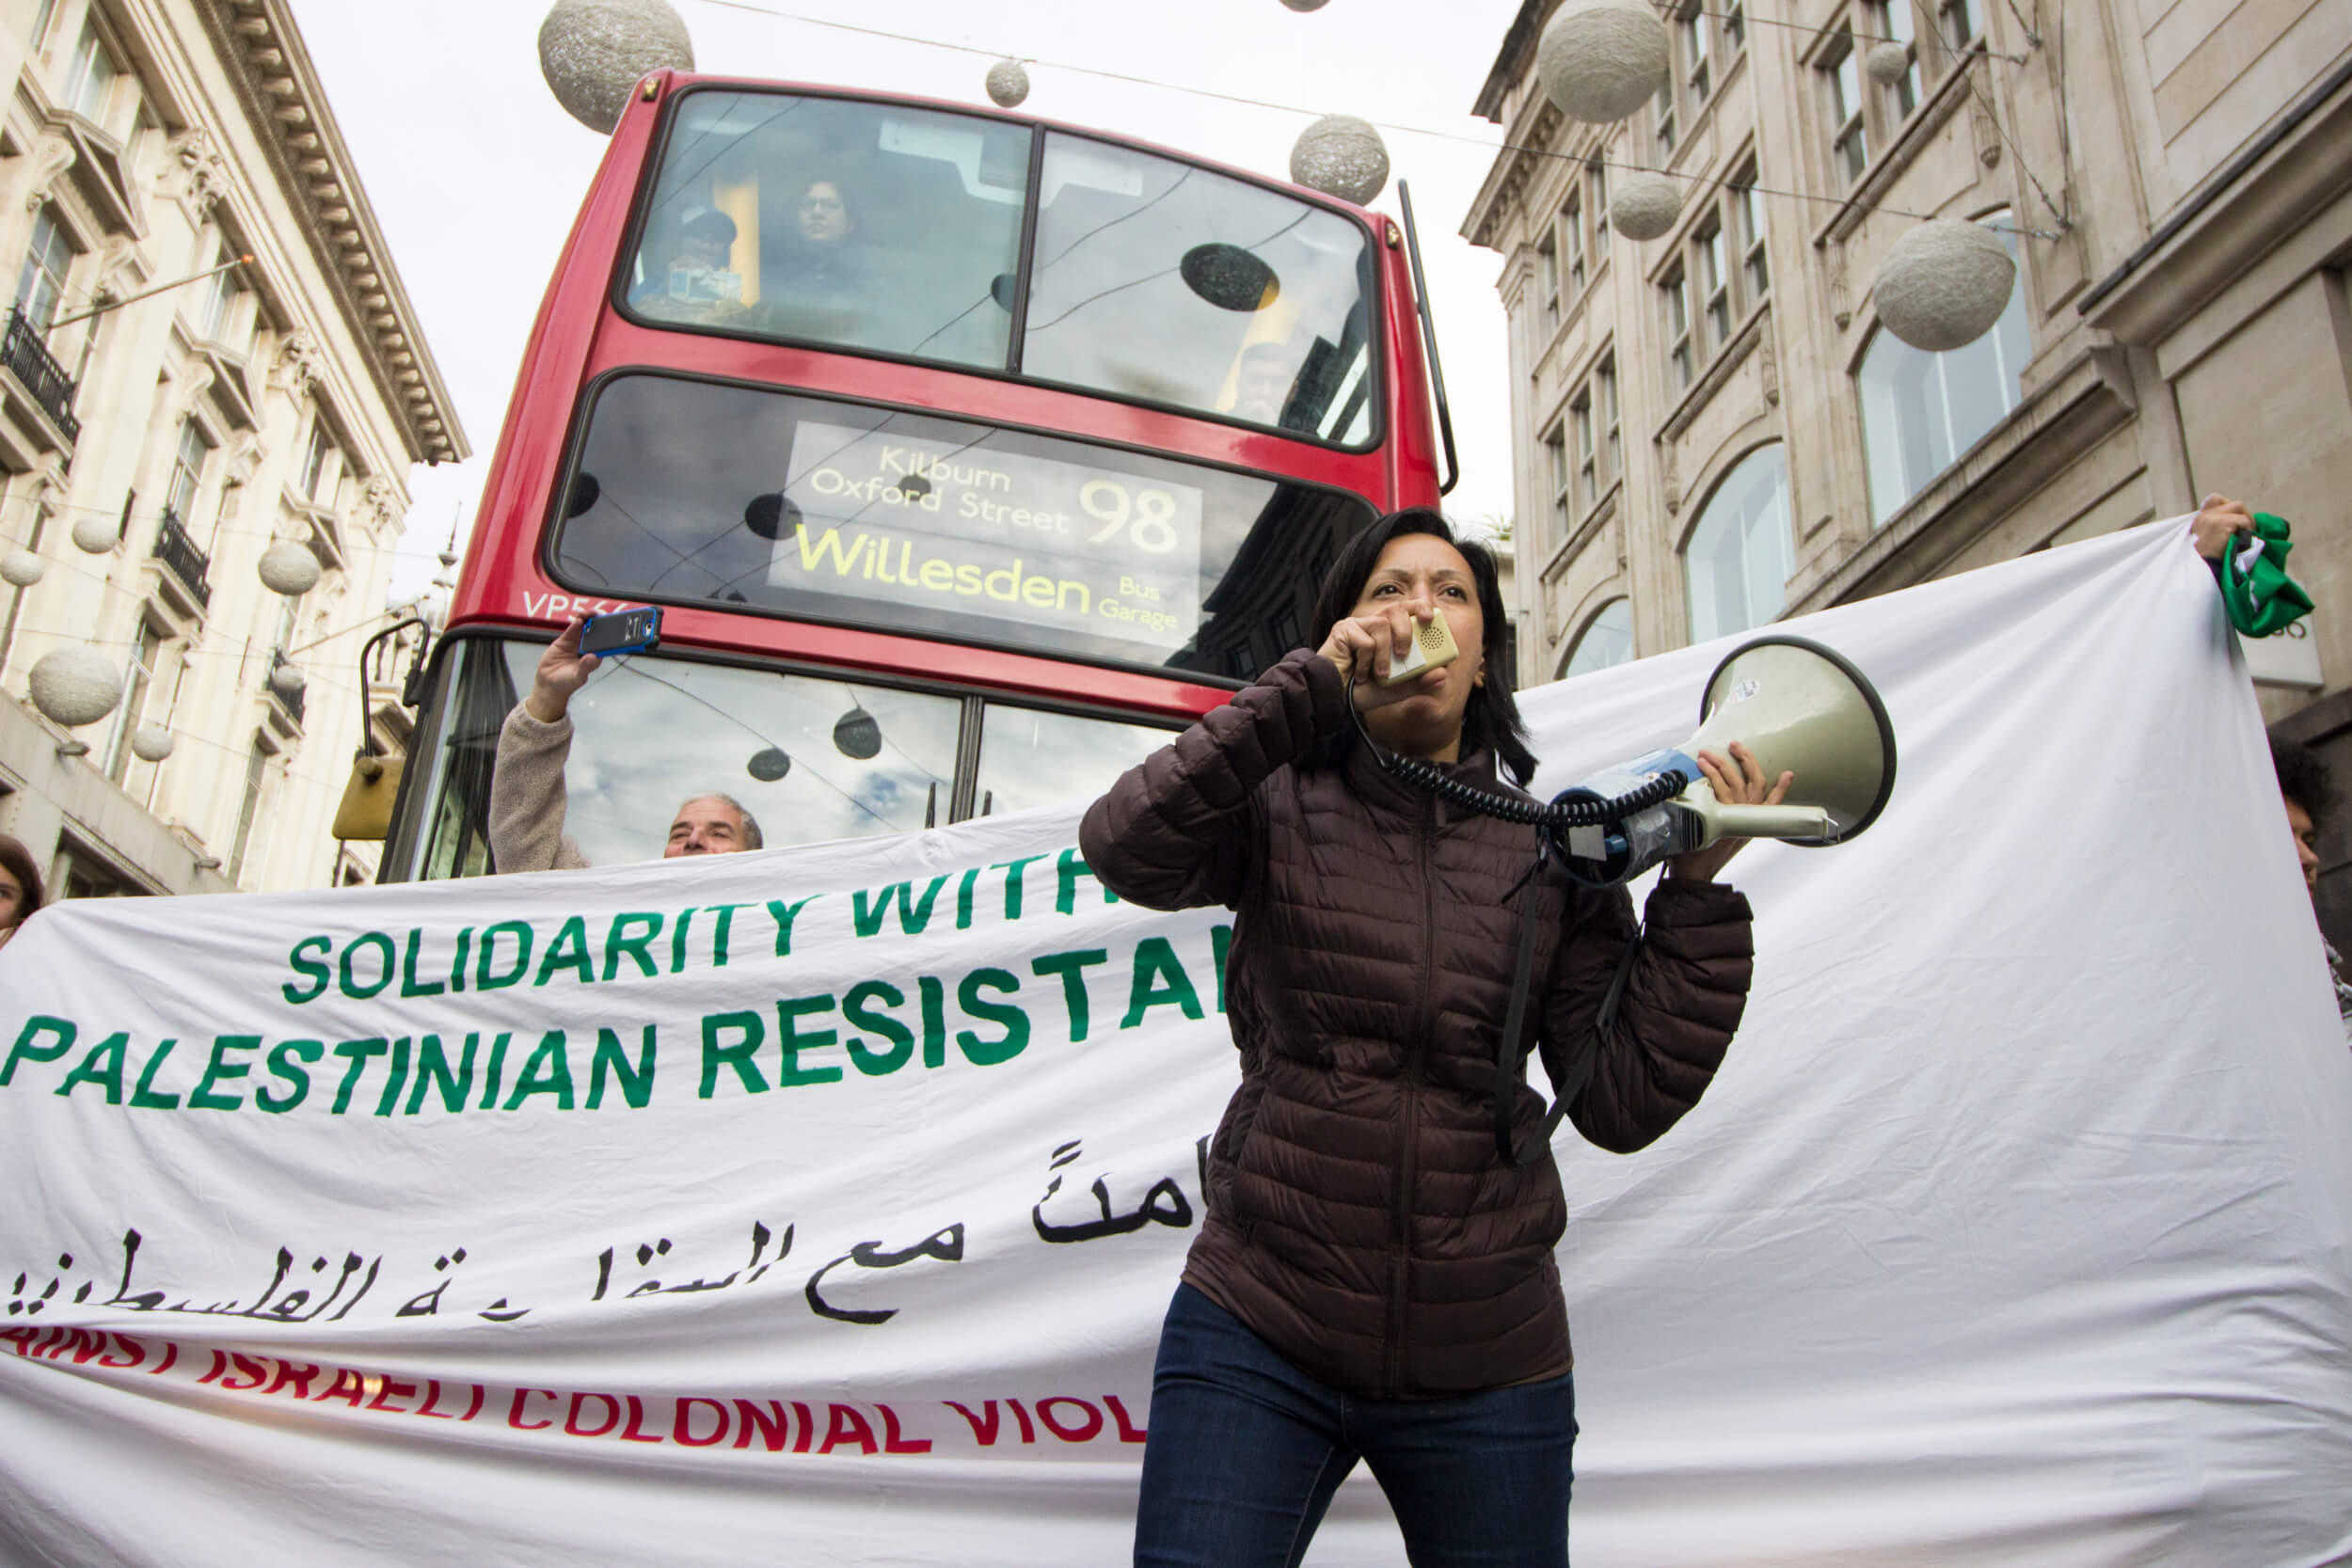 Palestinian artist and activist Rafeef Ziadah stops traffic on Oxford Street. (Photo: Sara Anna)